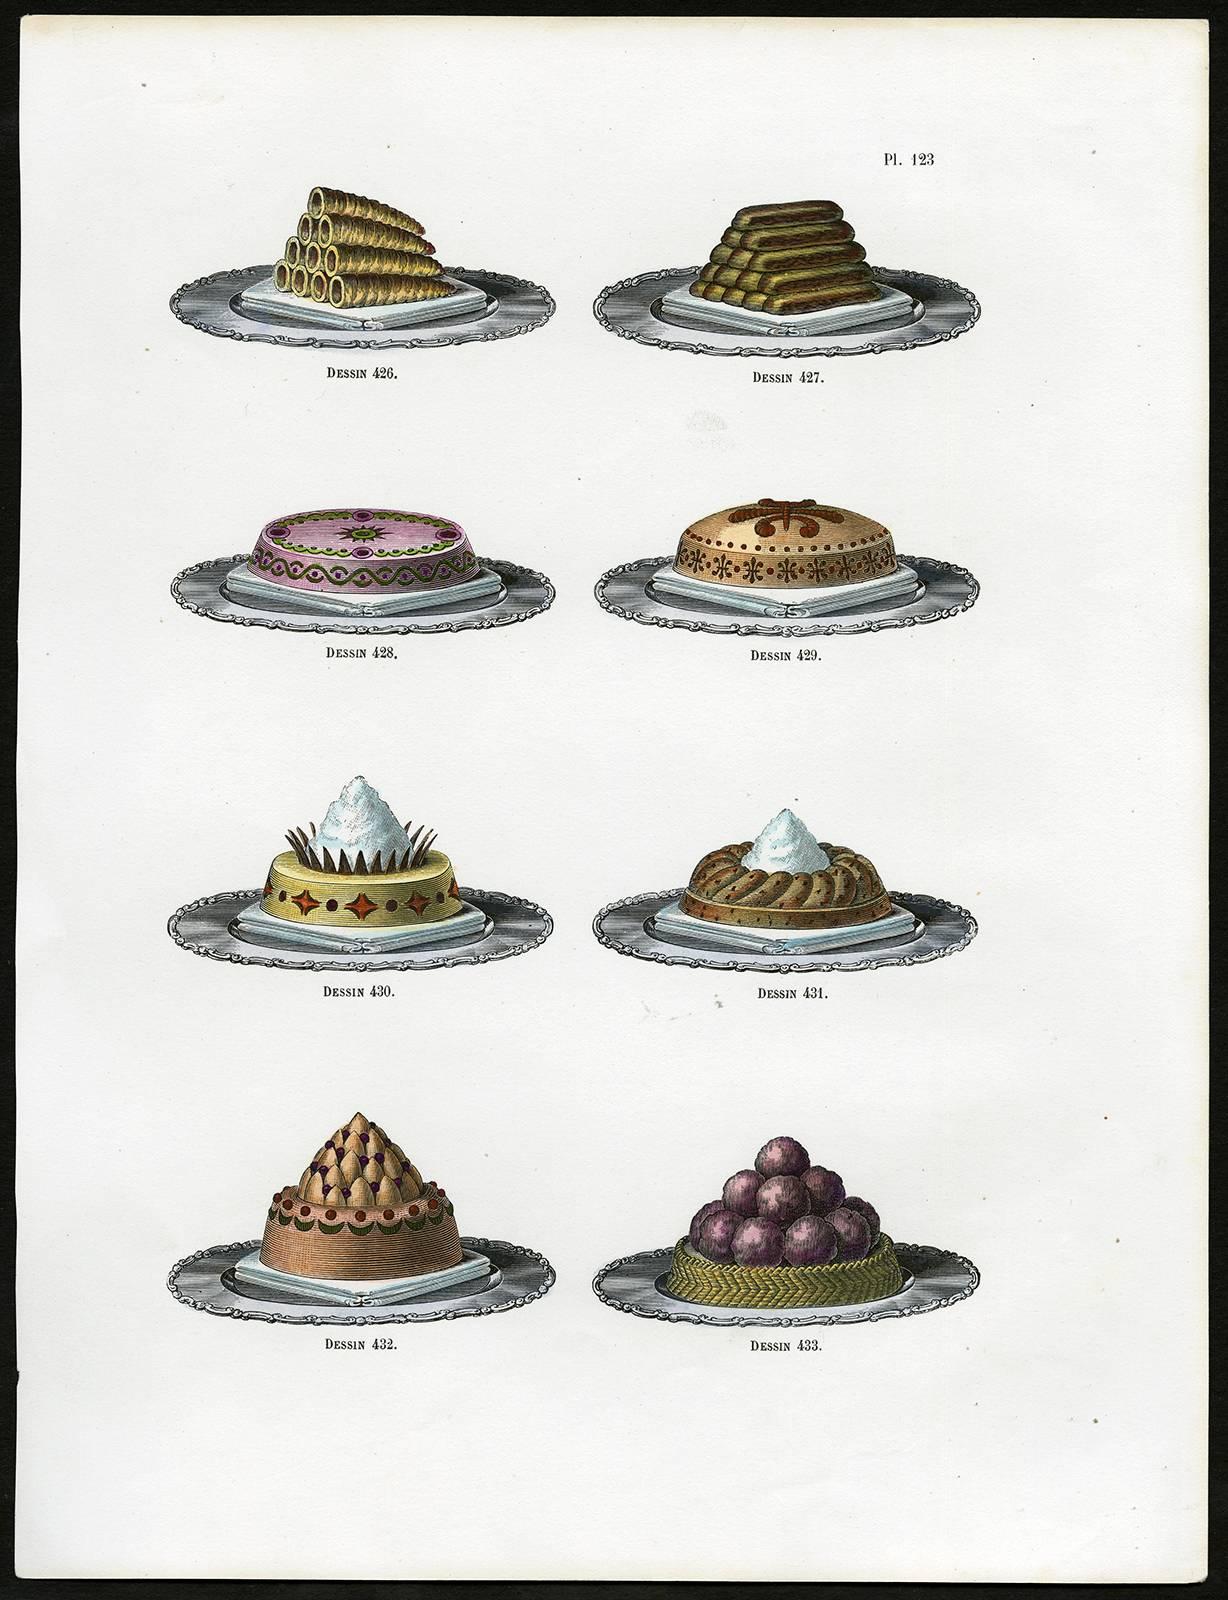 Urbain Dubois Print - Untitled. Plate 123, Dessins 426-433: 426-433 - Luxury serving plates.